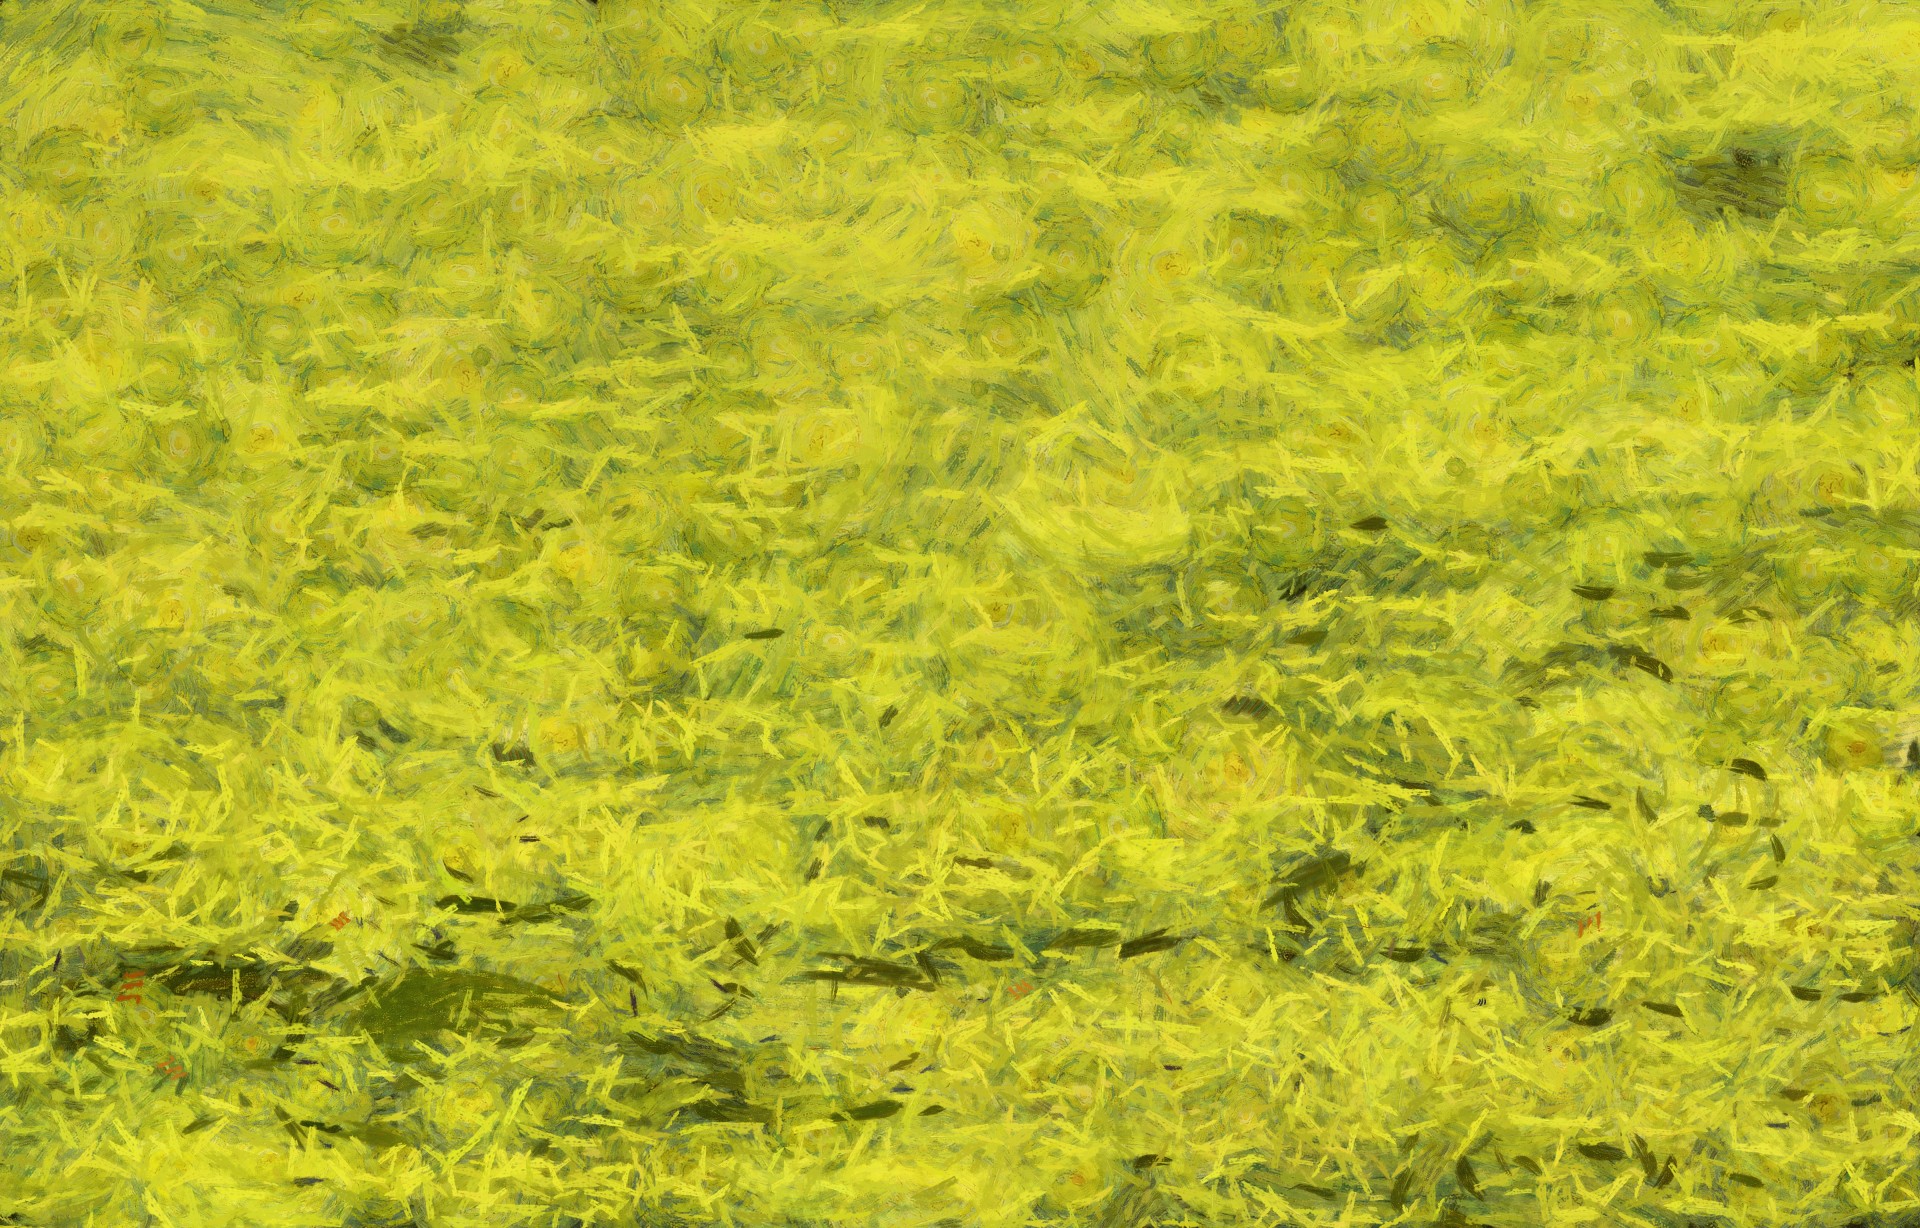 Digitally painted green grass background texture.